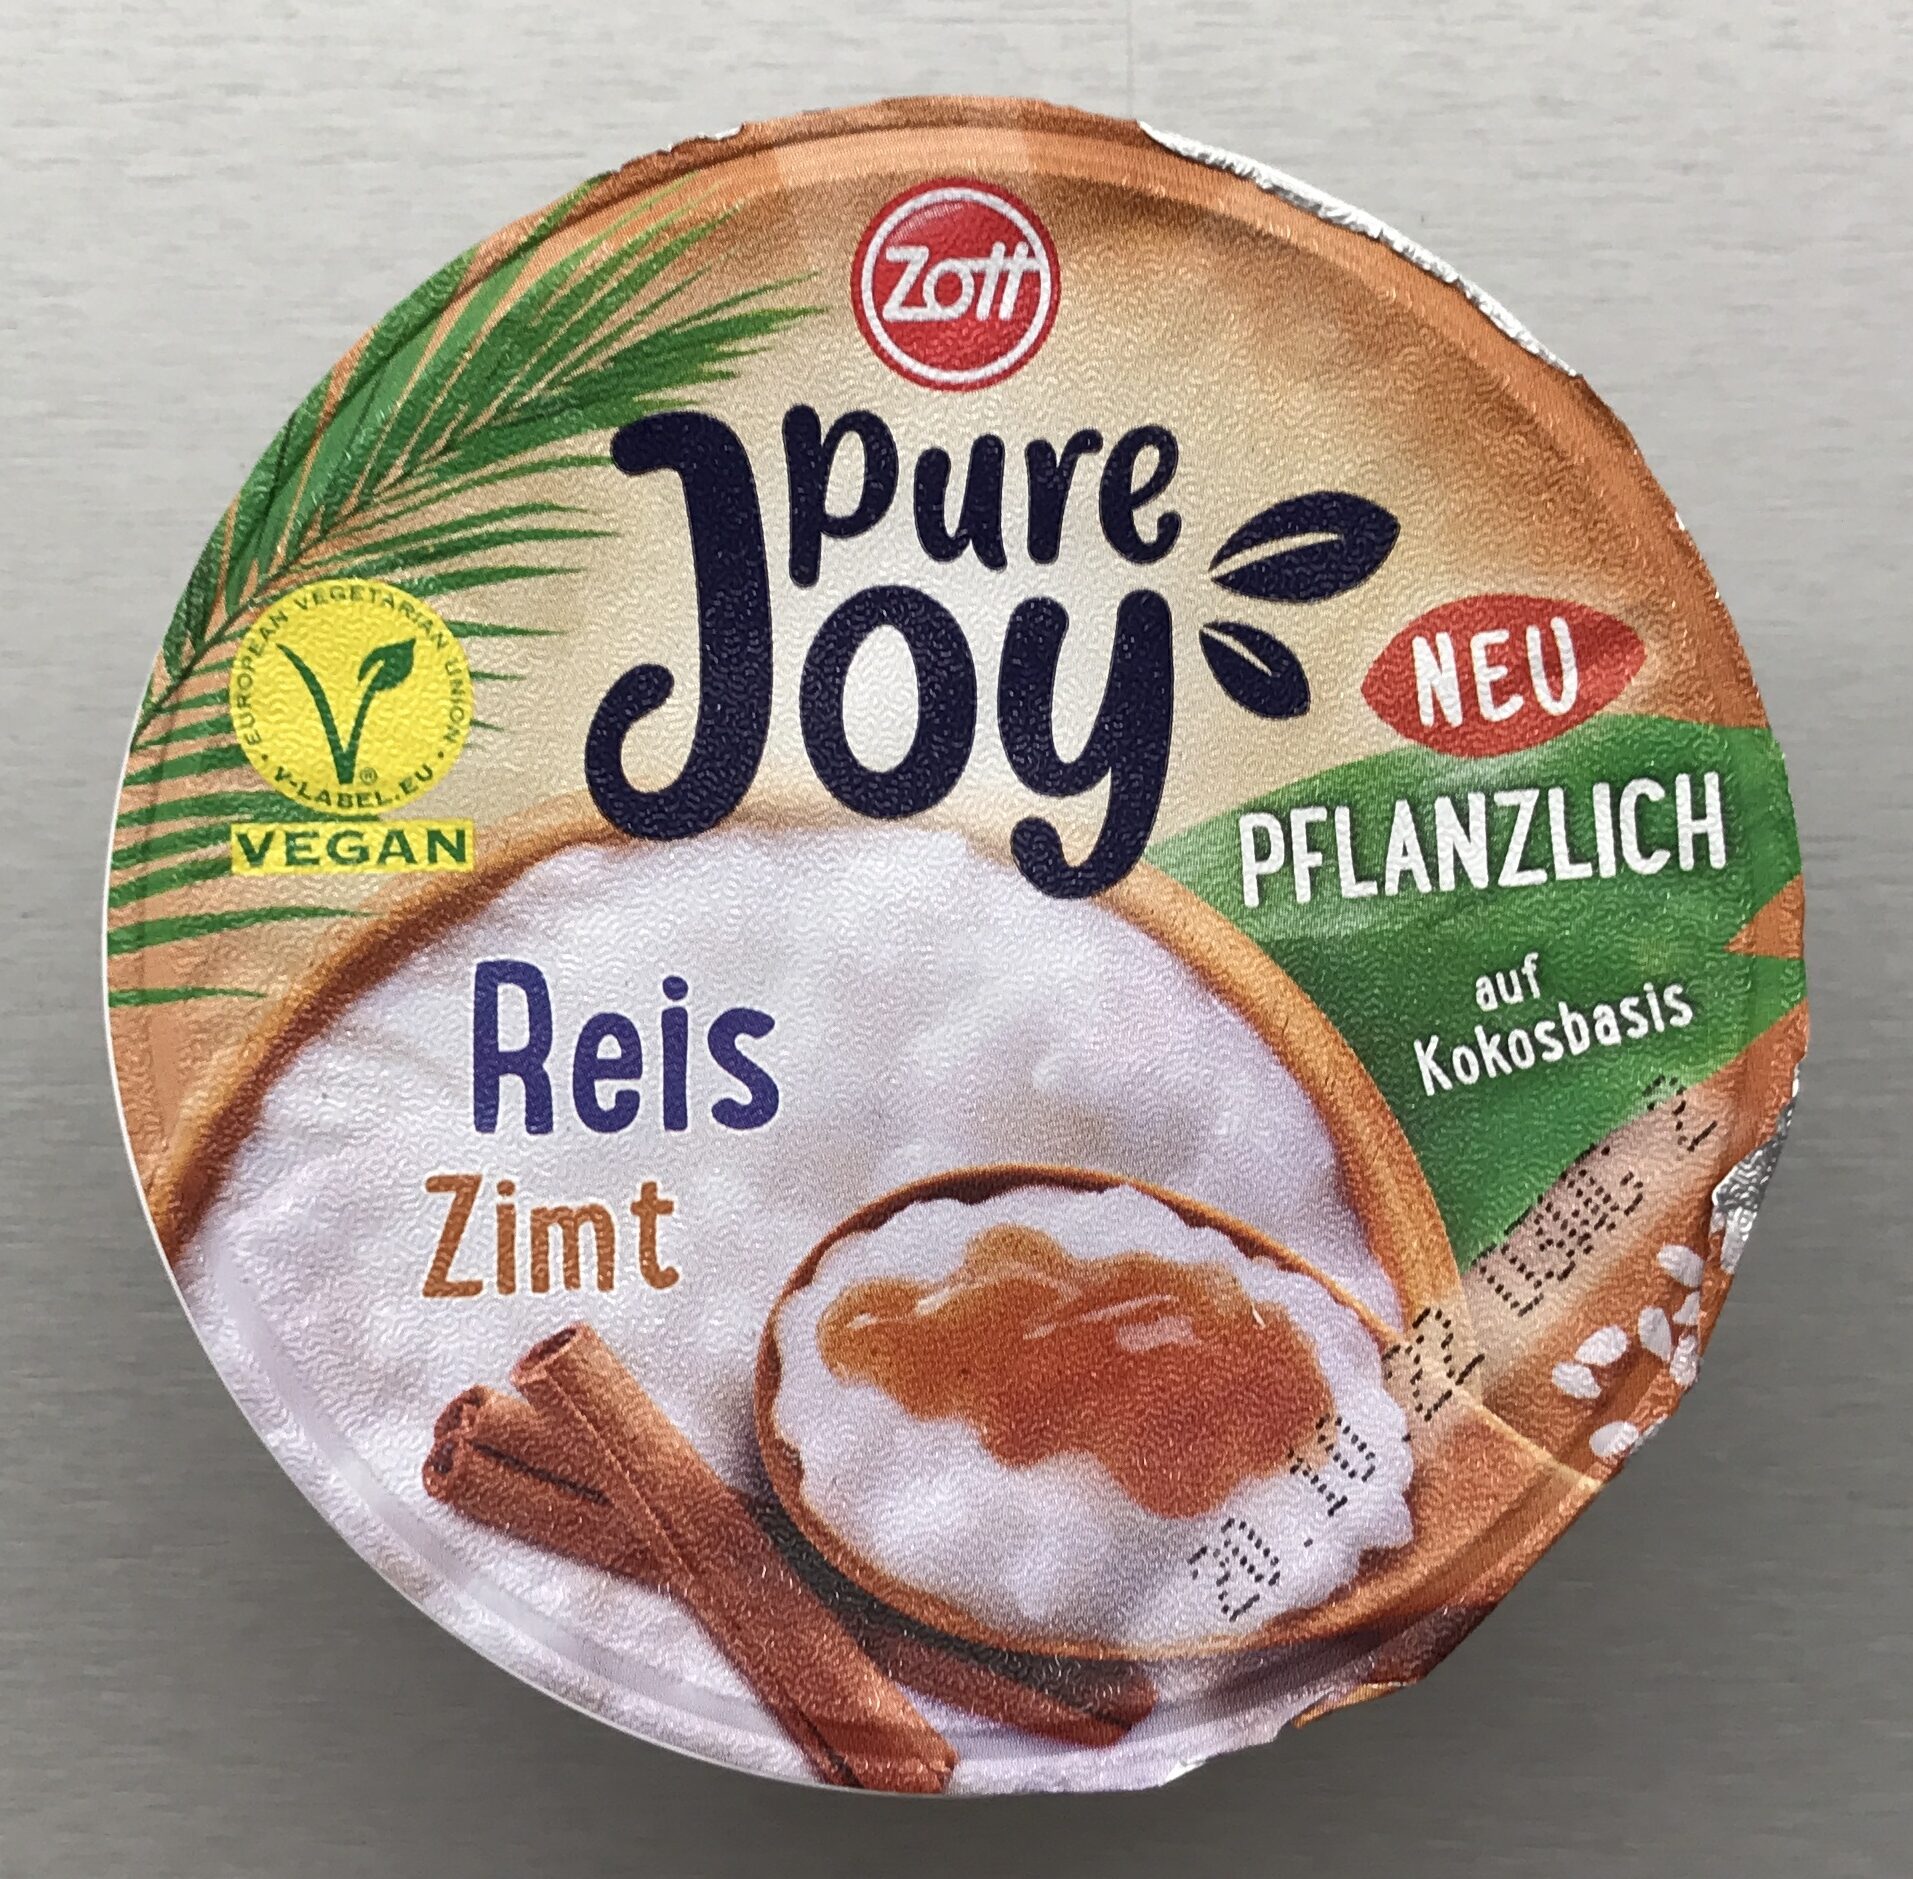 Pure Joy Reis Zimt - Product - de